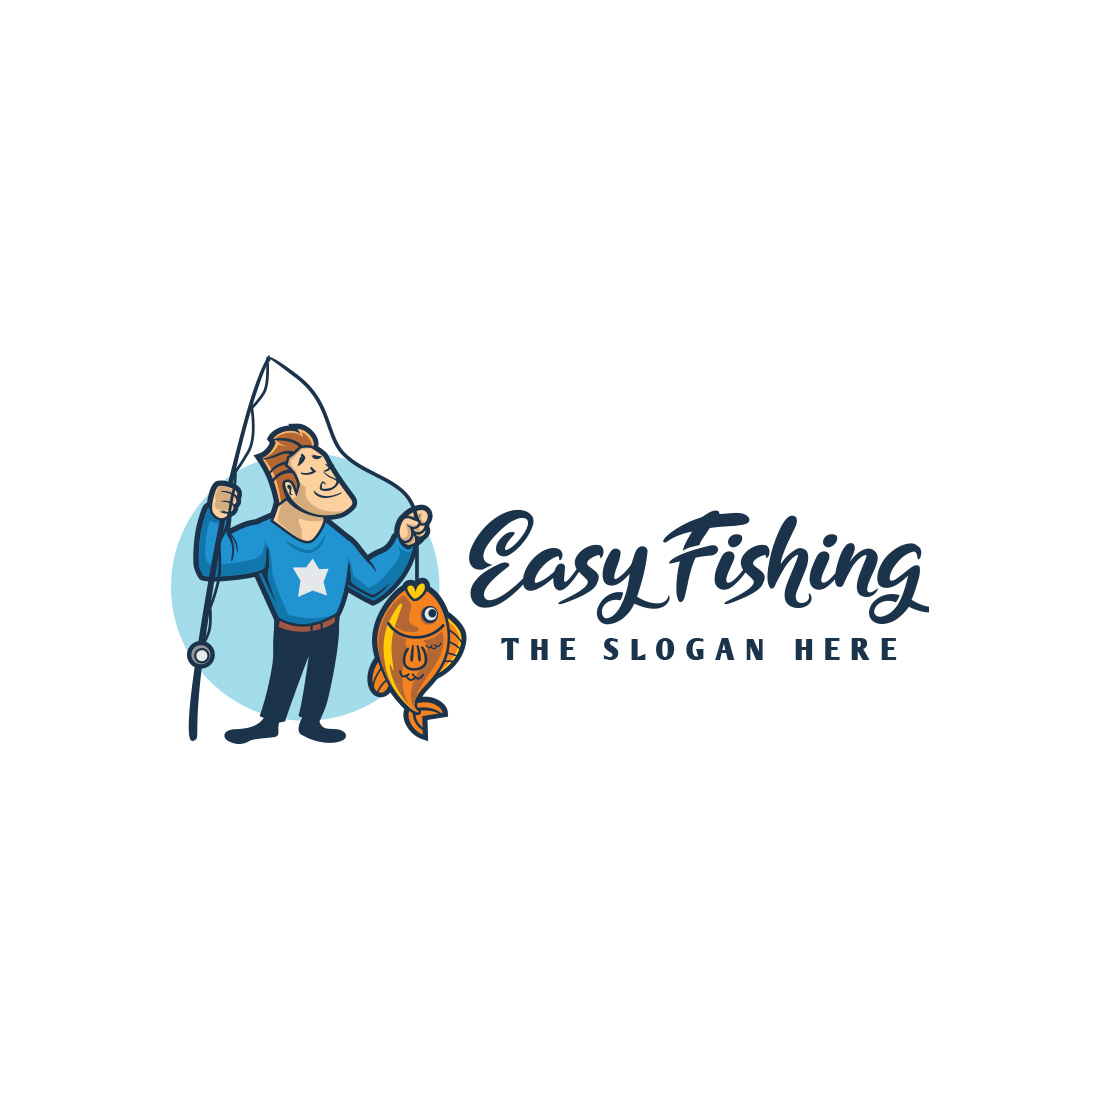 Getelman Angler - Fishing Mascot Logo Design cover image.